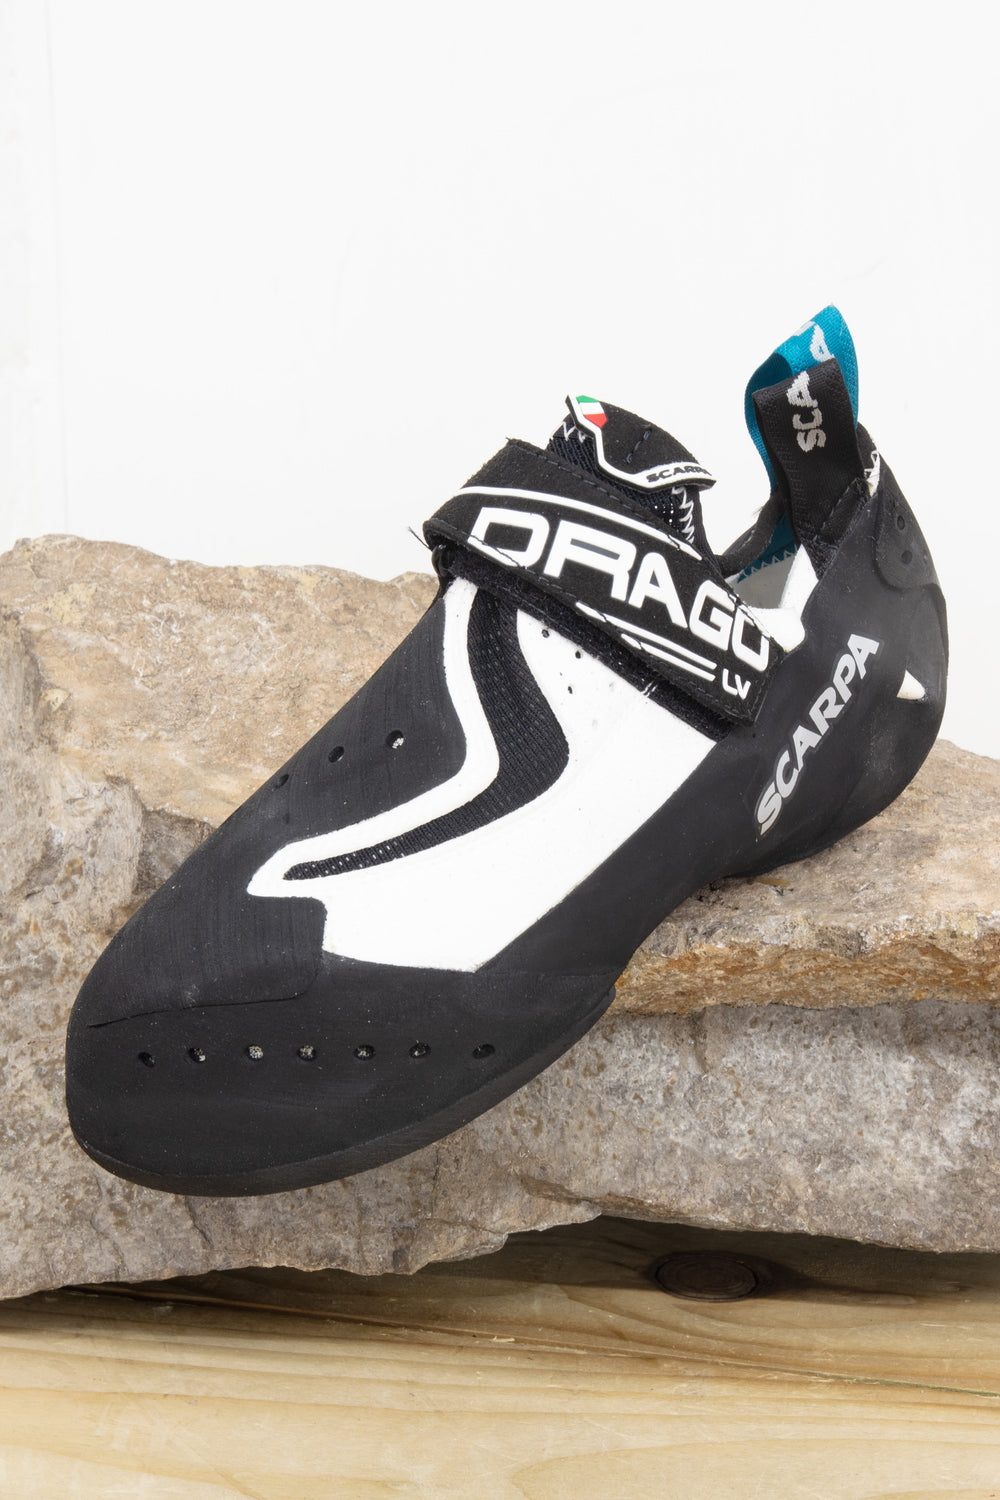 Scarpa Drago LV, Velcro strapped climbing shoes